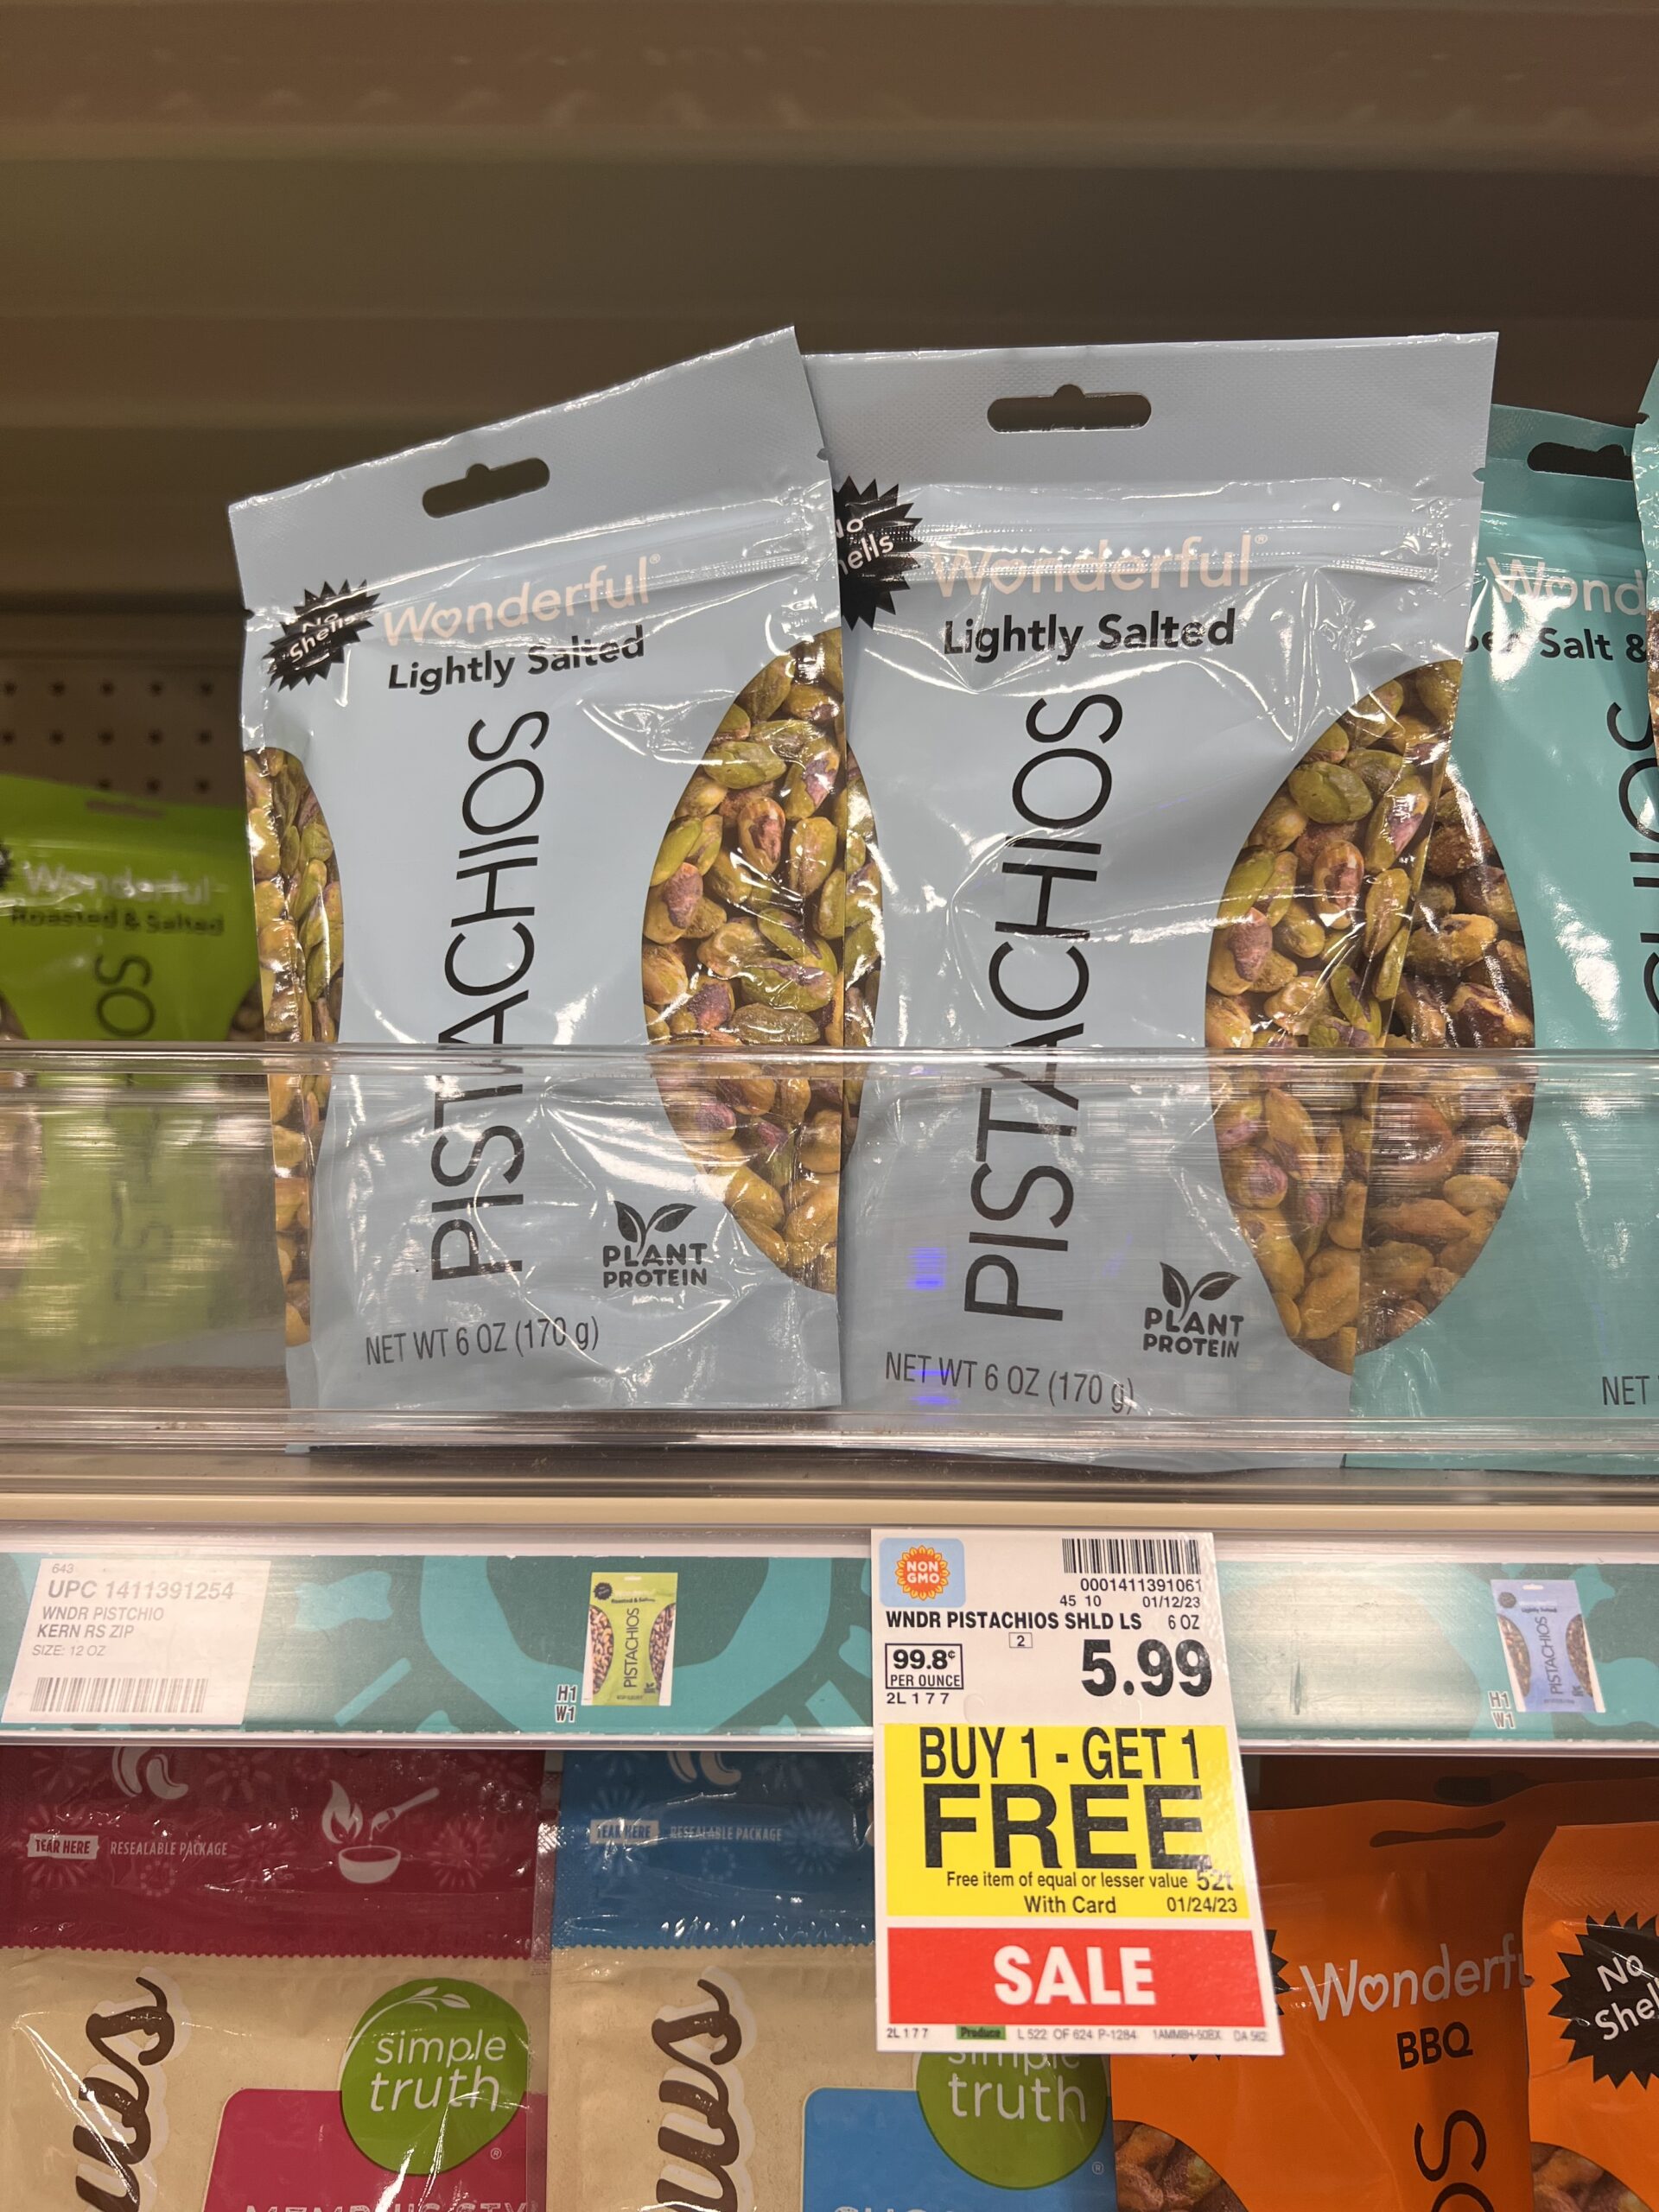 wonderful pistachios kroger shelf image 2